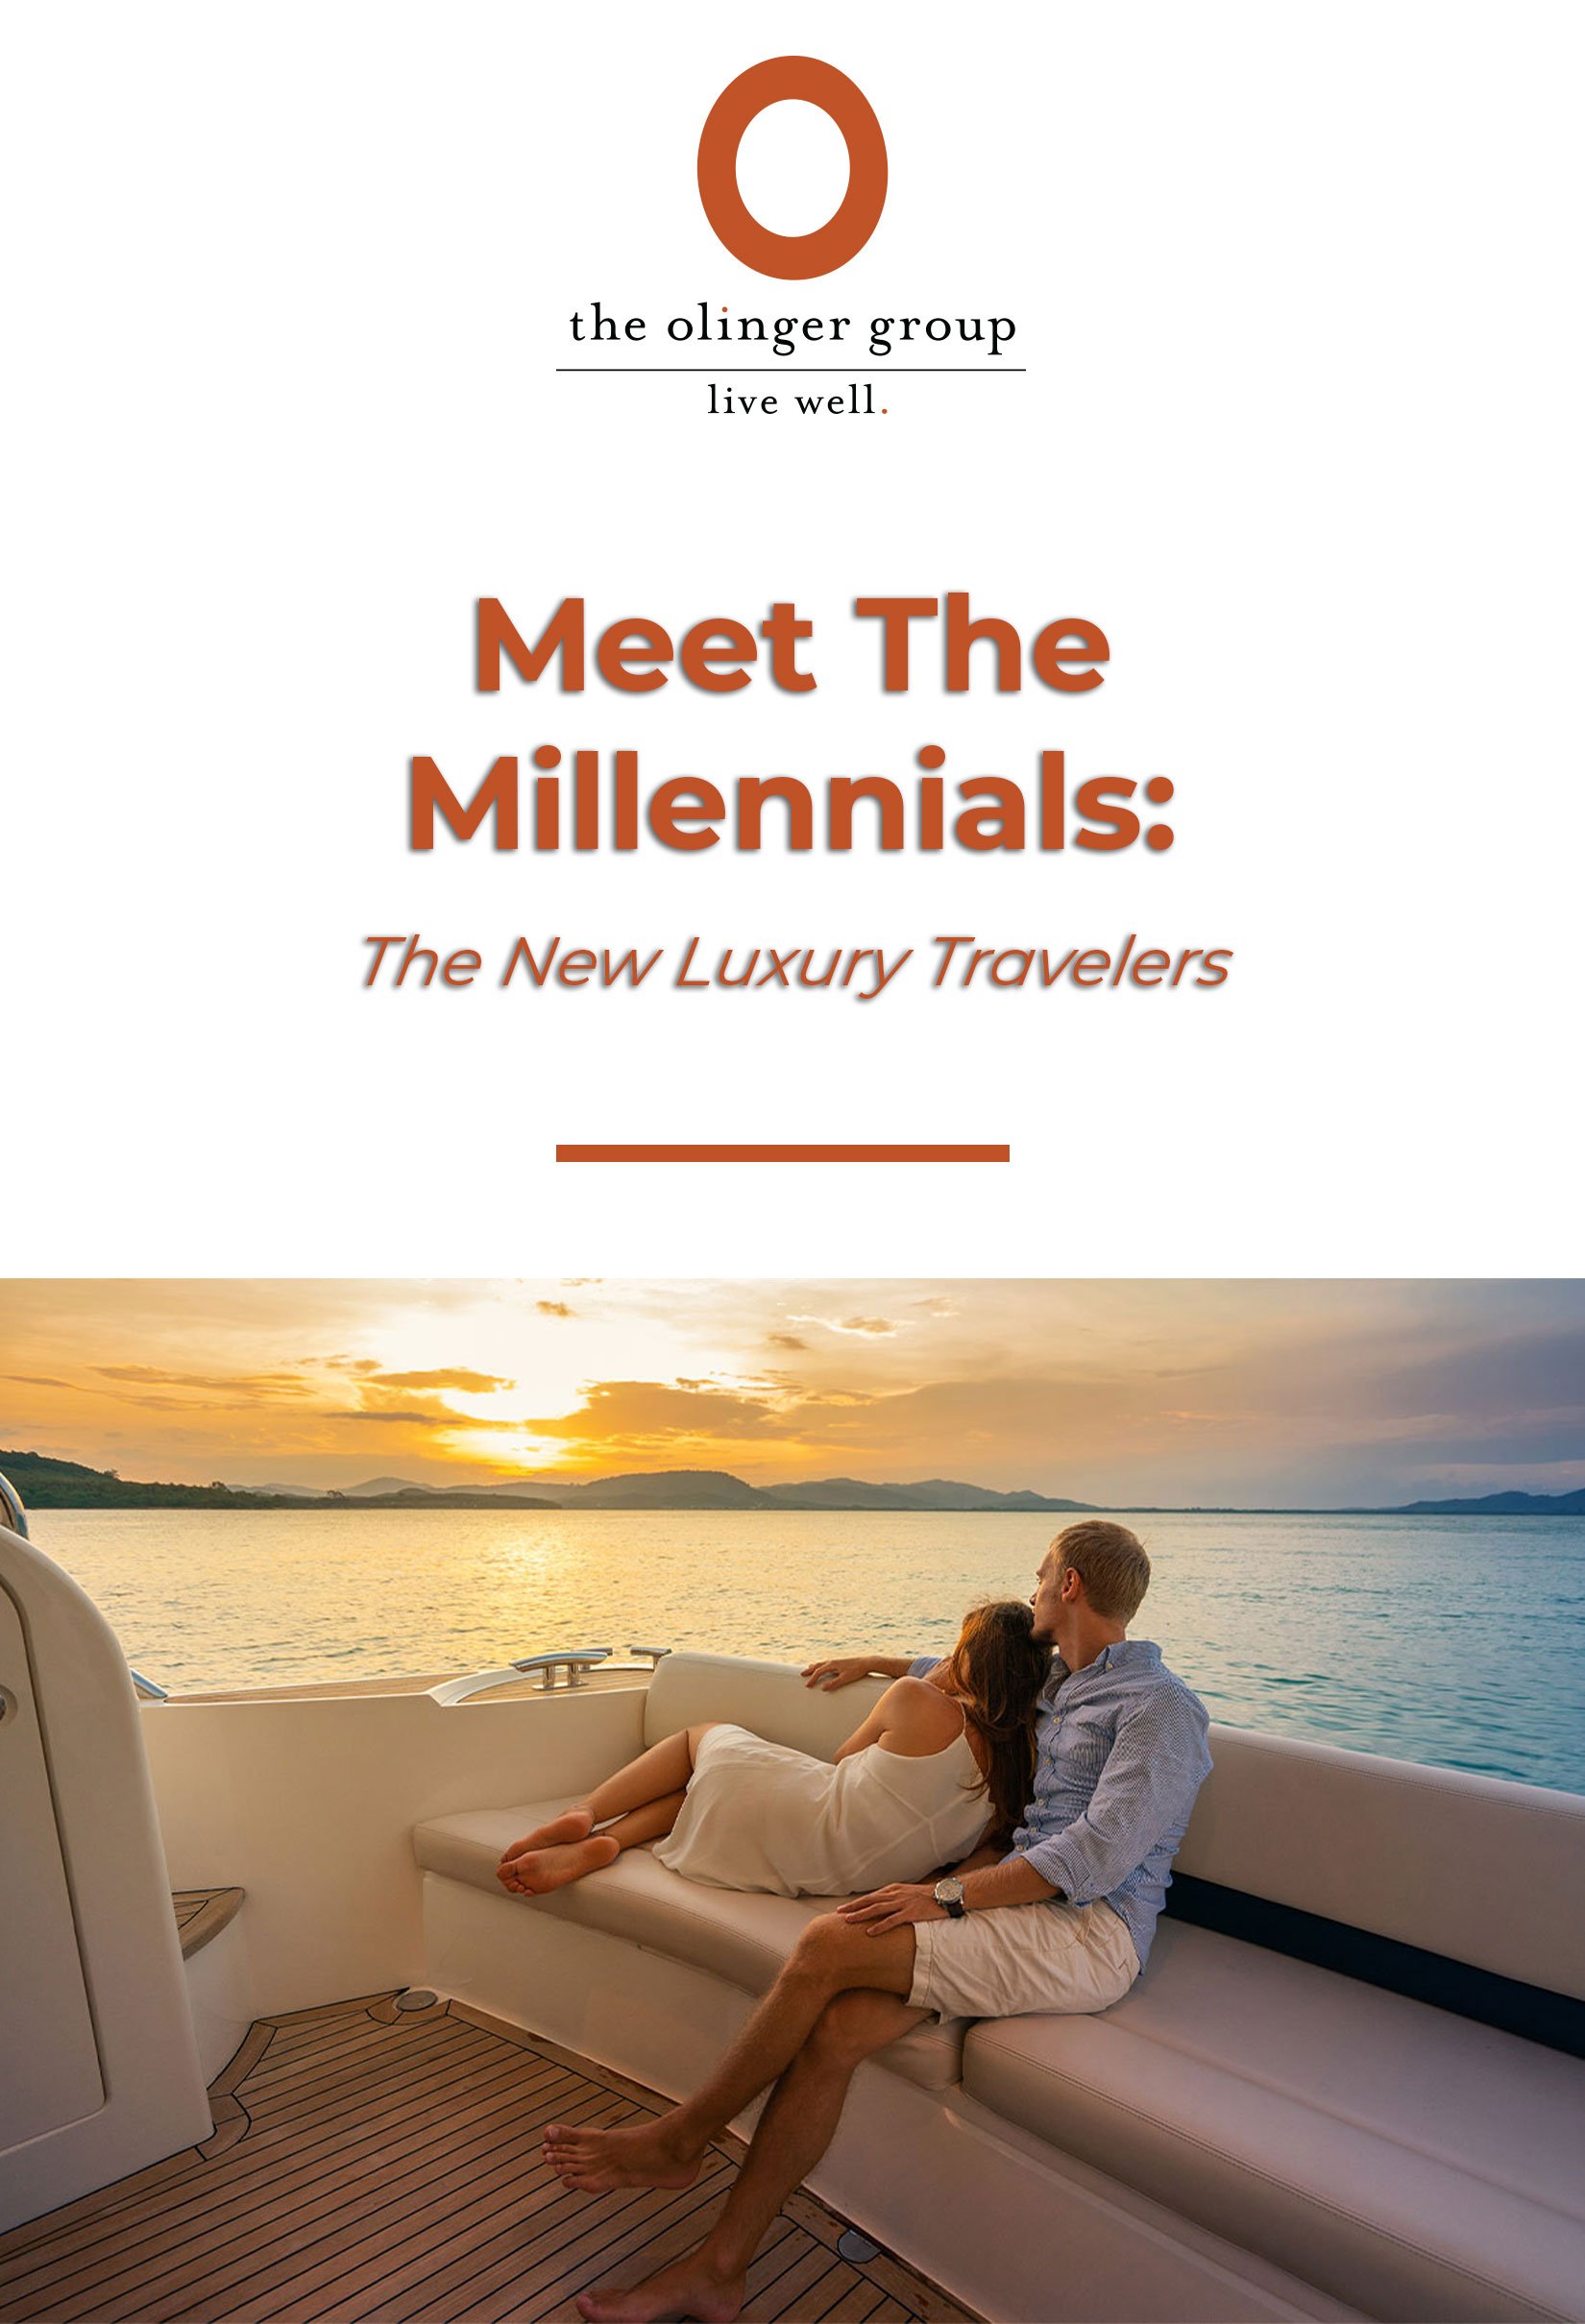 Meet-the-Millennials---The-New-Luxury-Travelers-Whitepaper